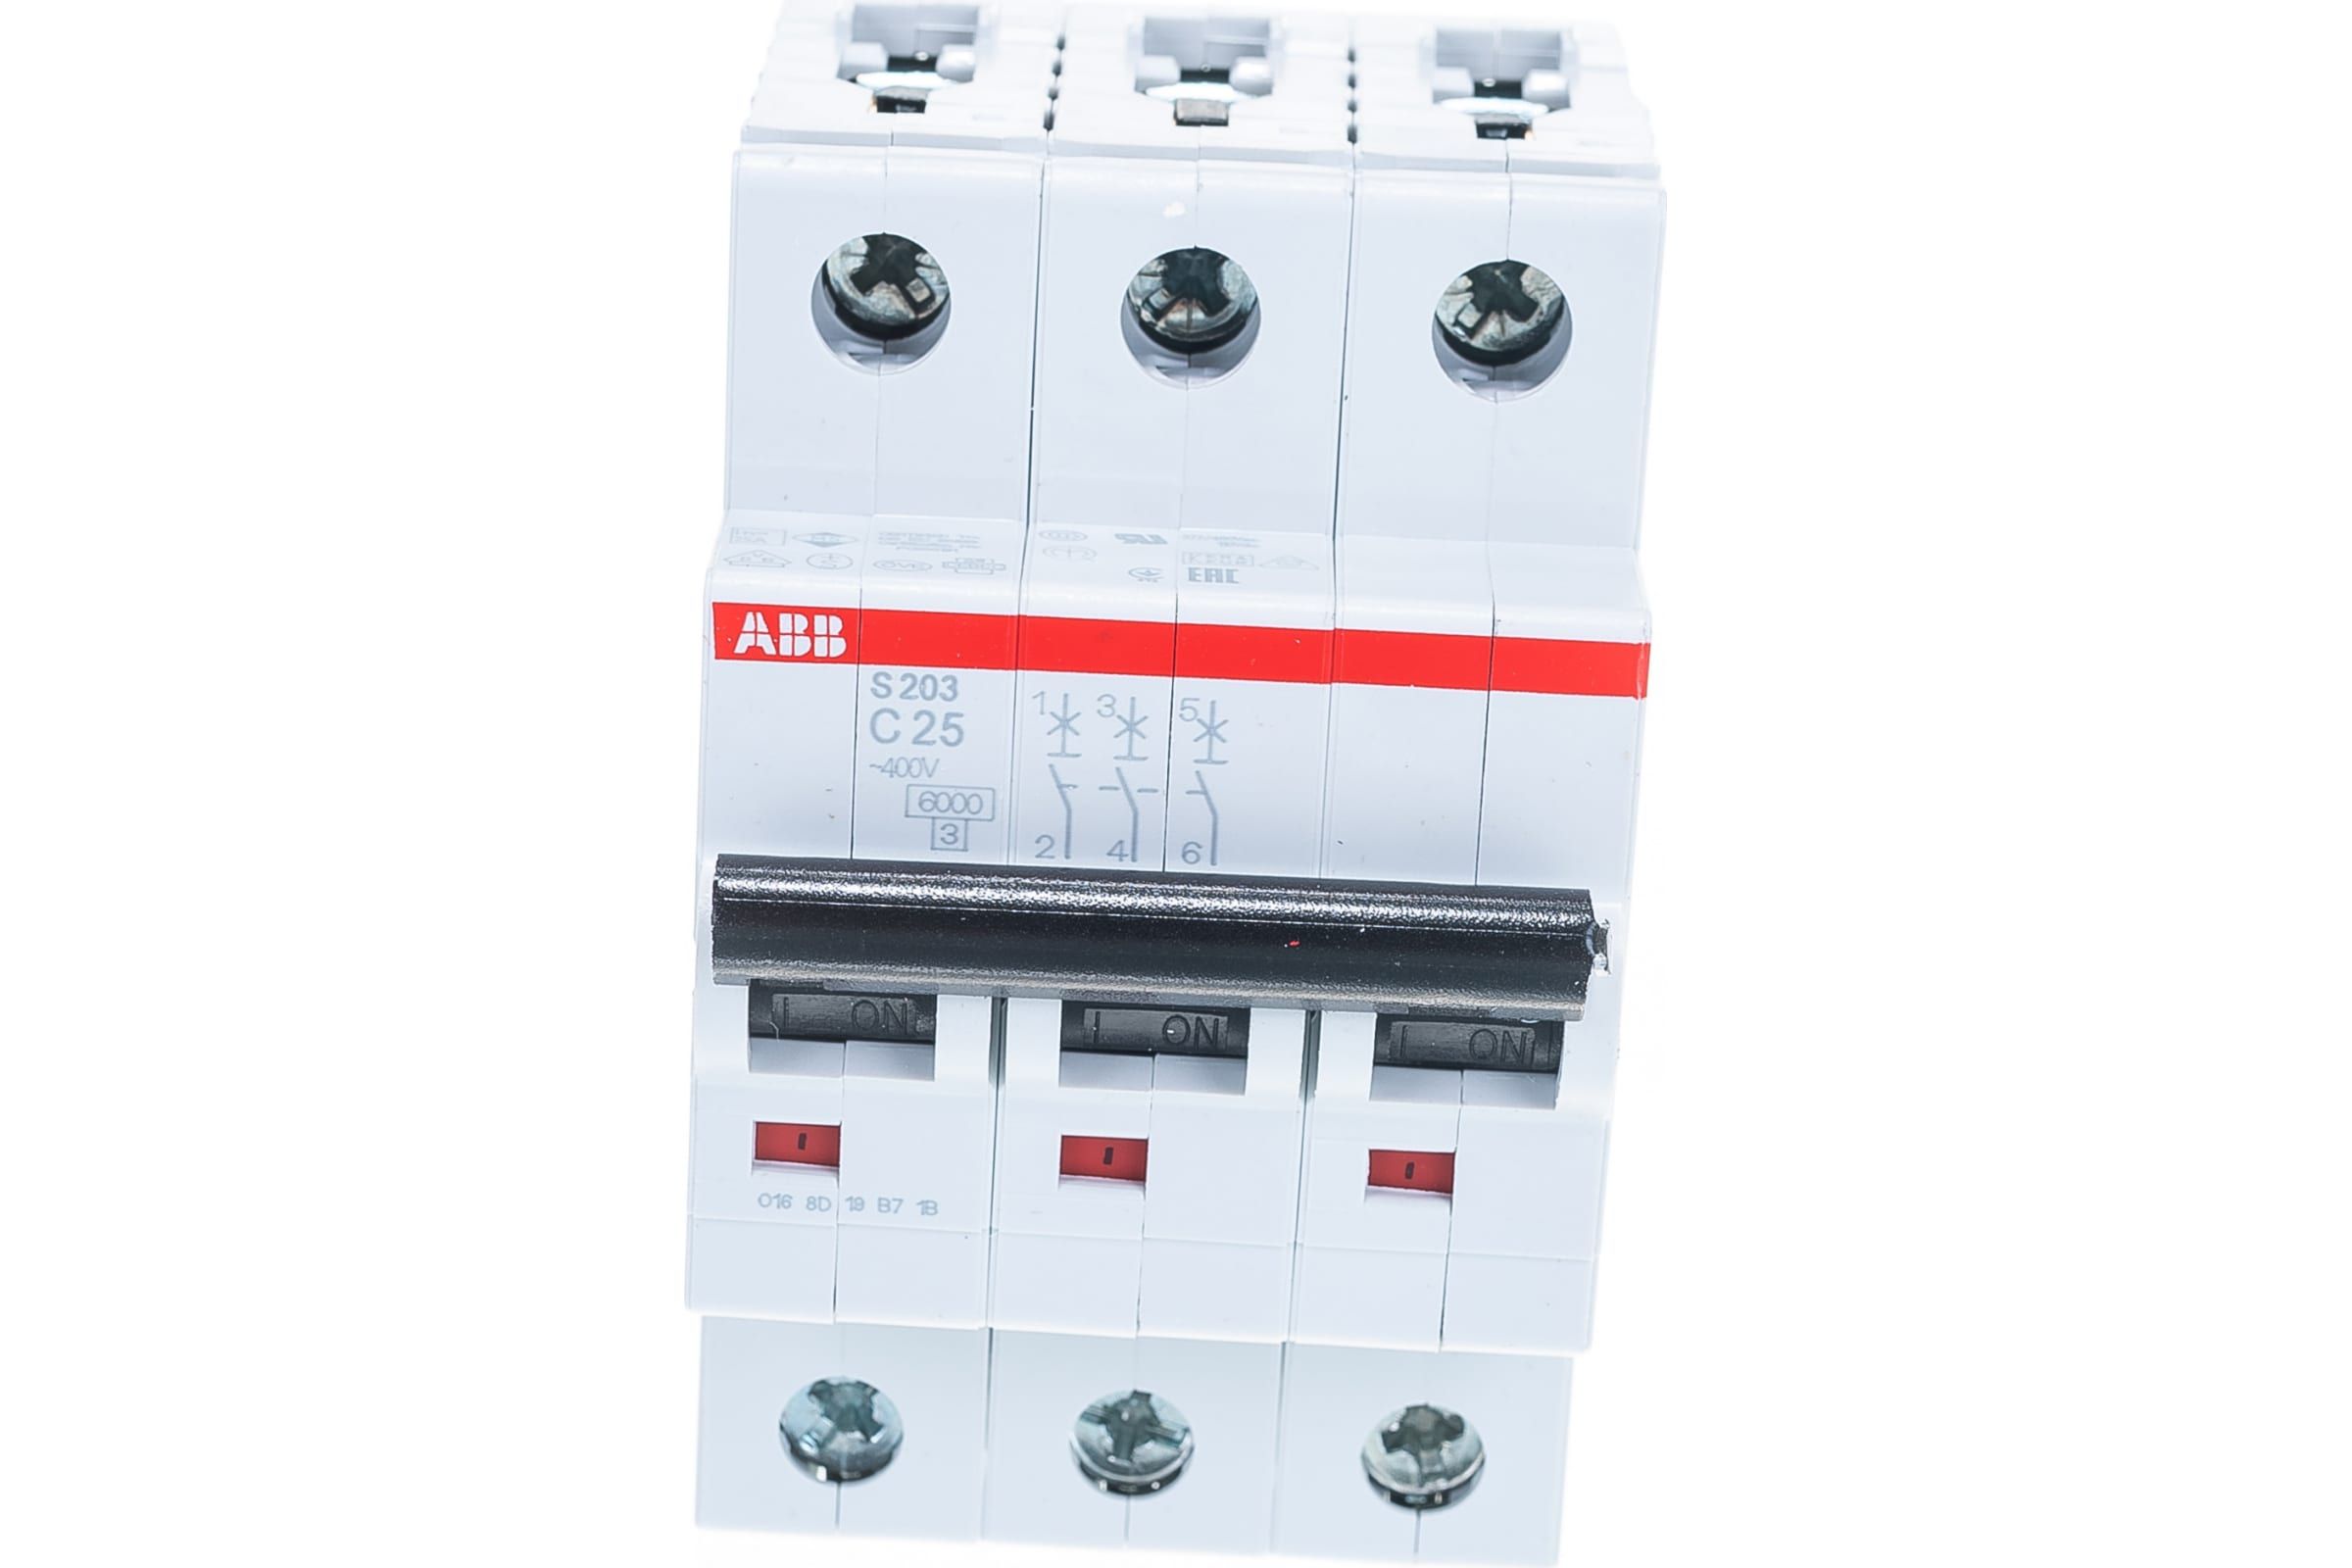 Abb автоматические выключатели 25а. Автомат ABB s203 c25. Автоматический выключатель ABB 3-полюсный s203 c50 (автомат). Автомат ABB 25 ампер. S203 c25 3p.